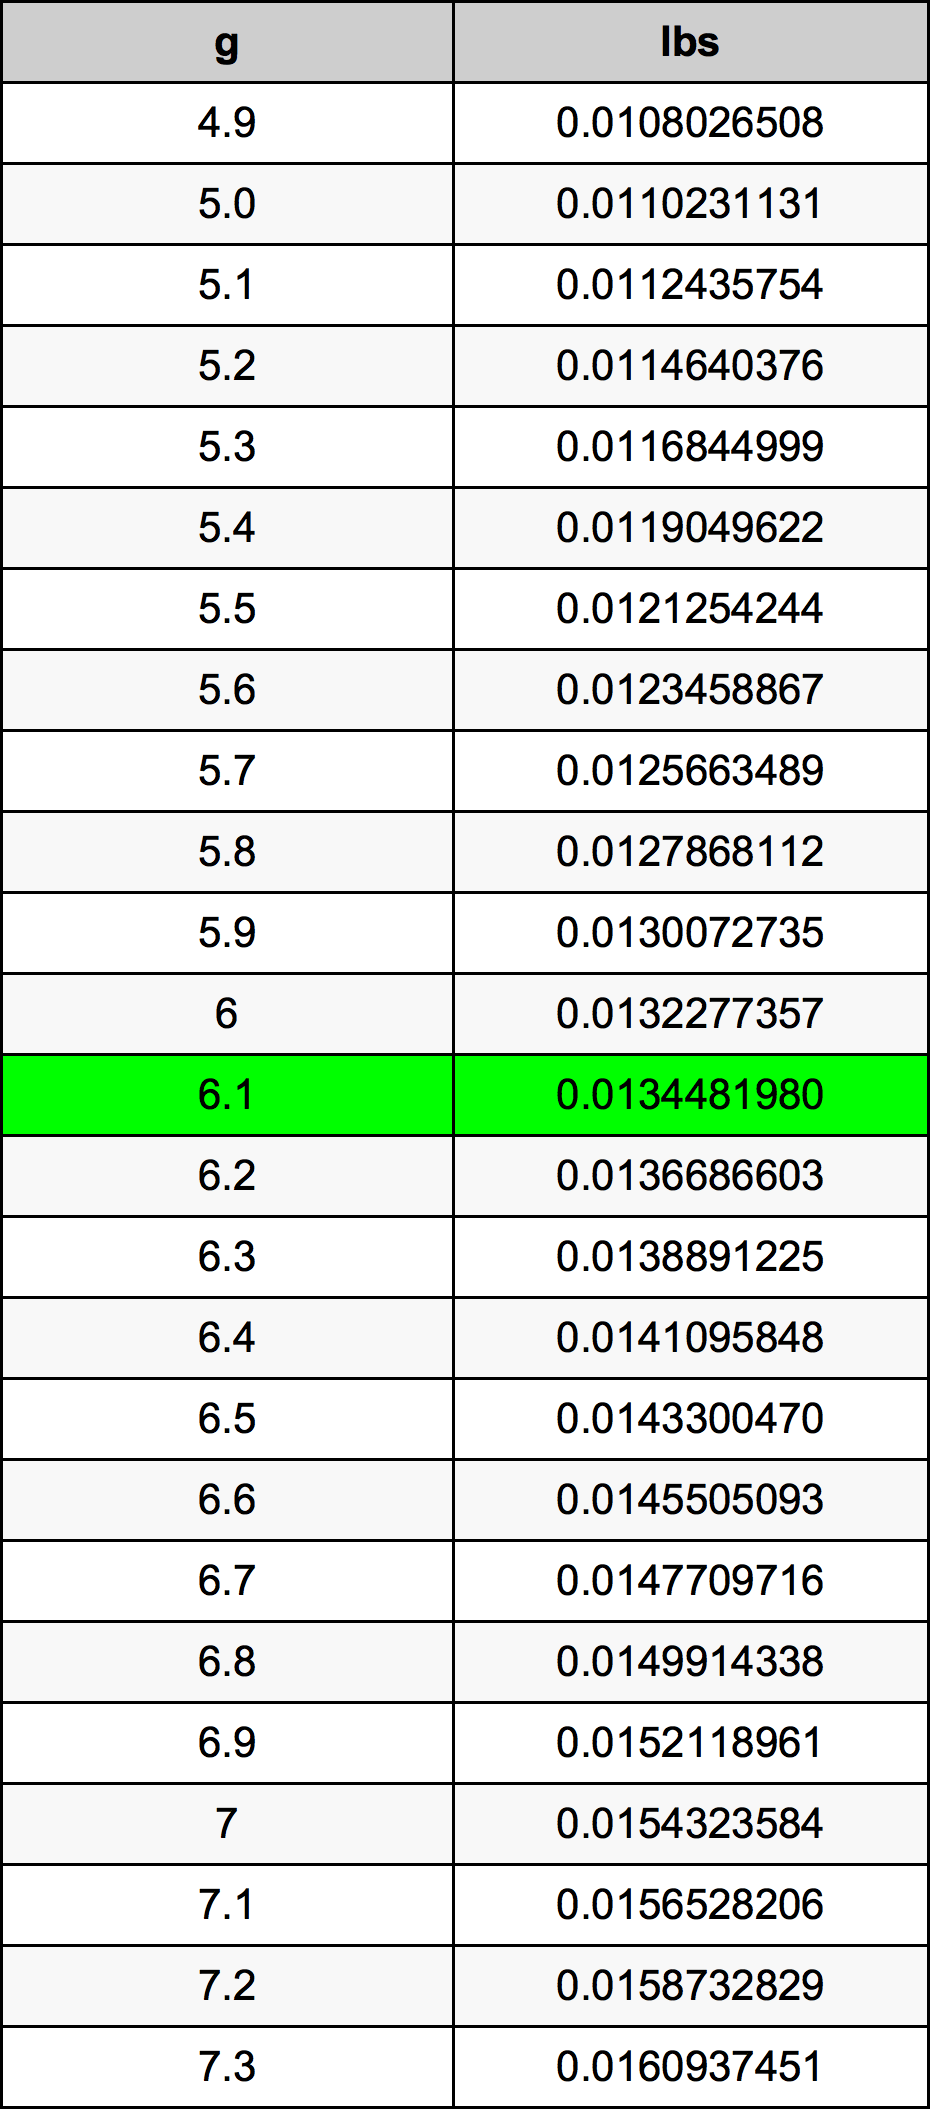 6.1 غرام جدول تحويل